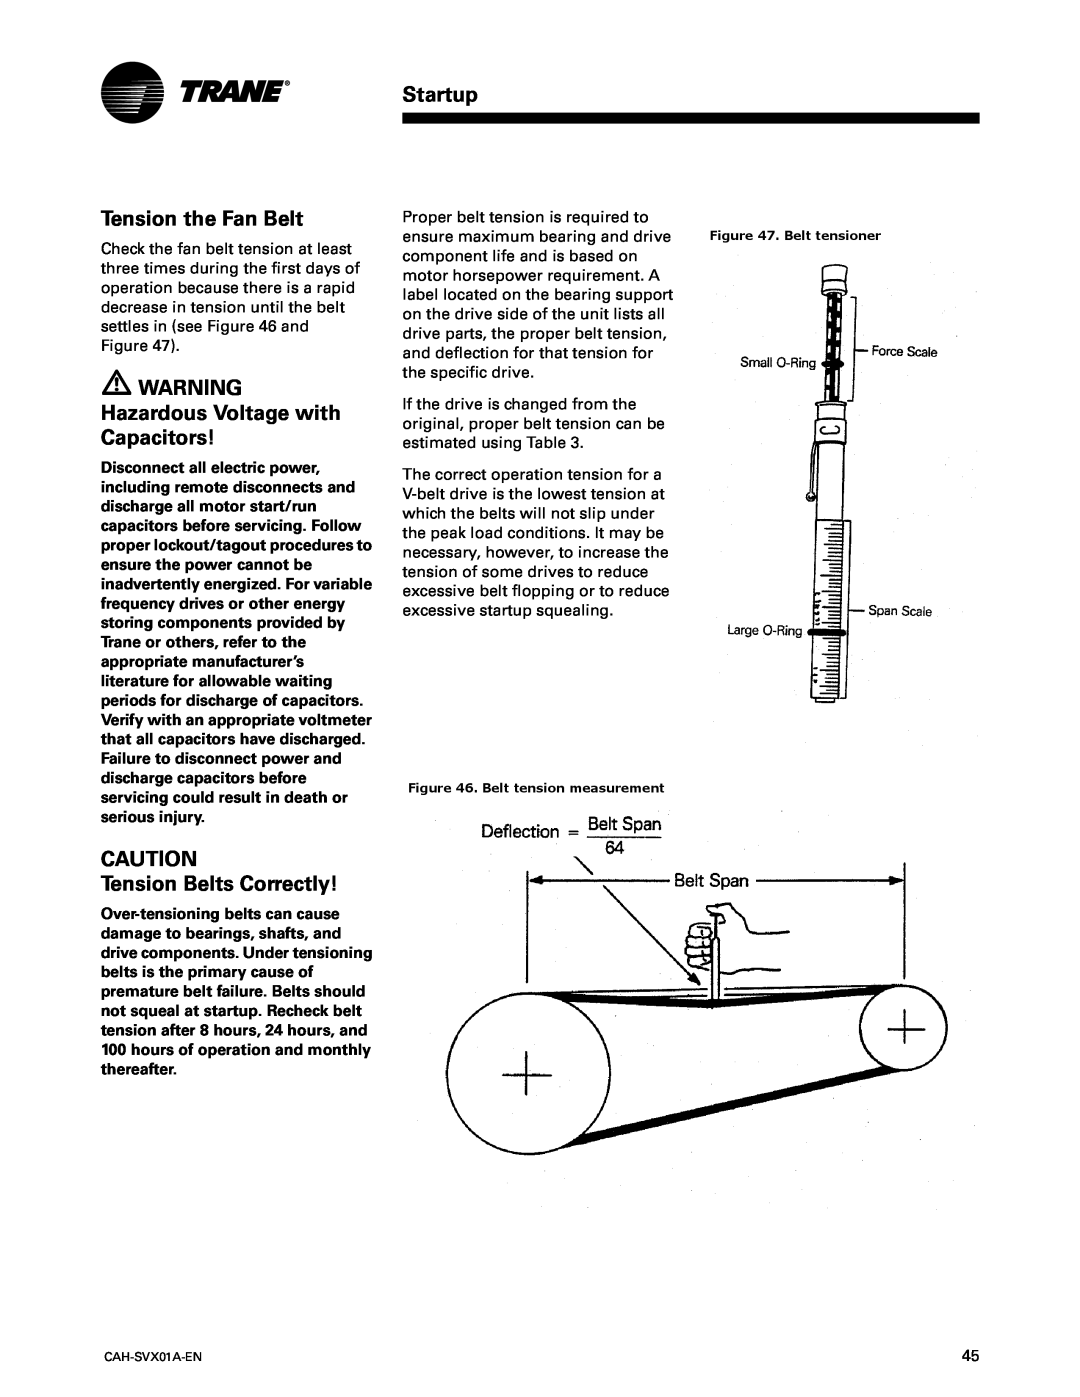 Trane Custom Climate Changer Air Handlers, CAH-SVX01A-EN manual Tension the Fan Belt, Tension Belts Correctly, Startup 